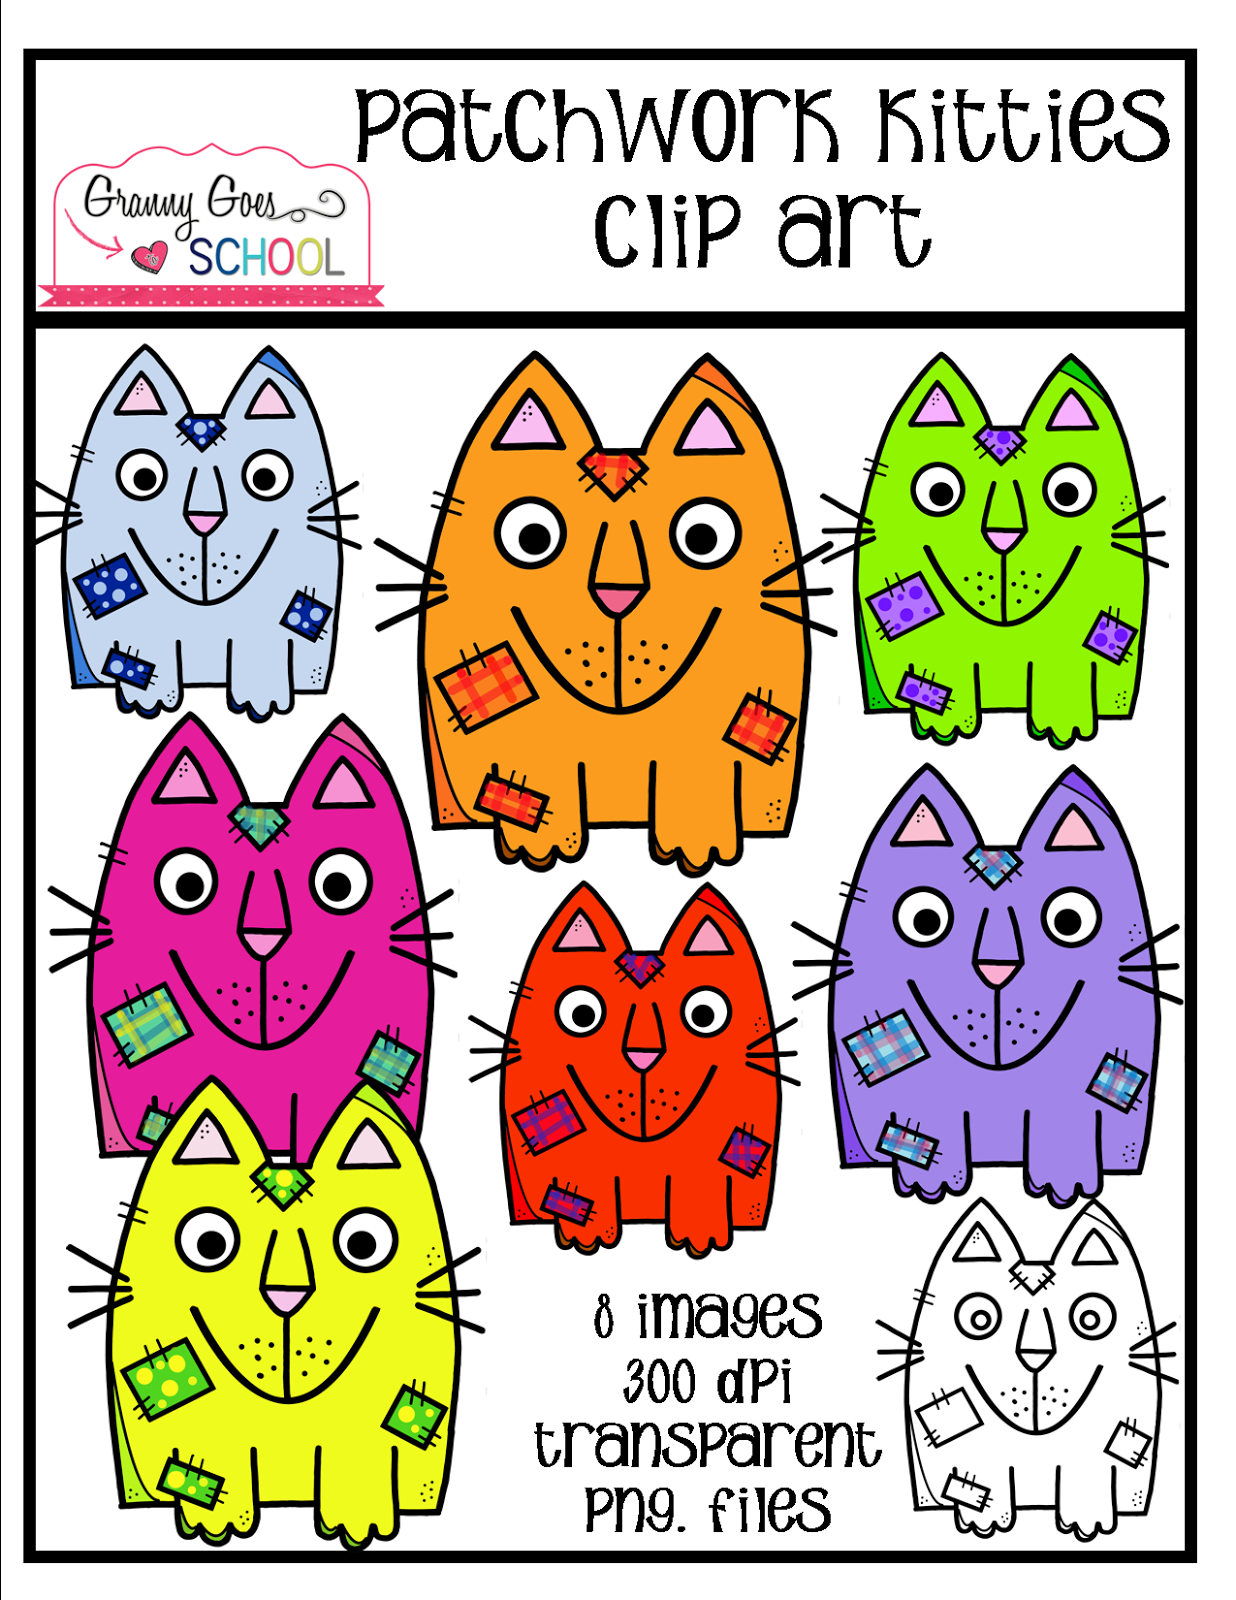 http://www.teacherspayteachers.com/Product/Patchwork-Kitties-Freebie-Clip-Art-1608060